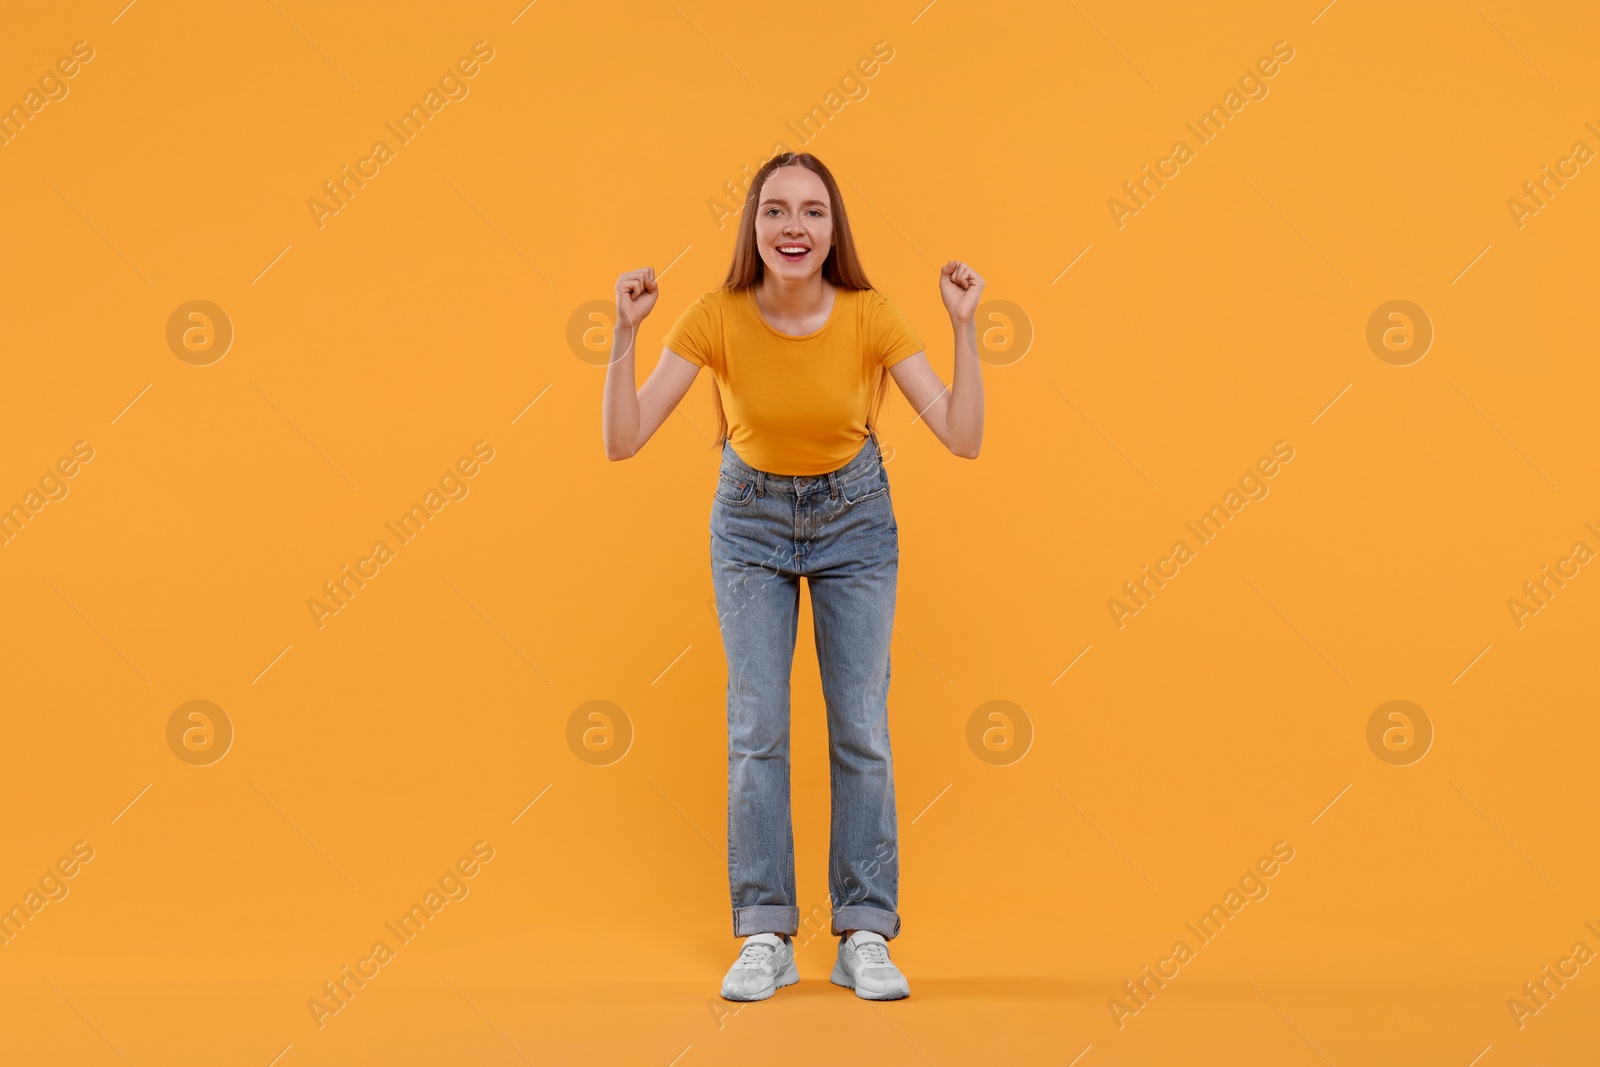 Photo of Emotional sports fan celebrating on yellow background